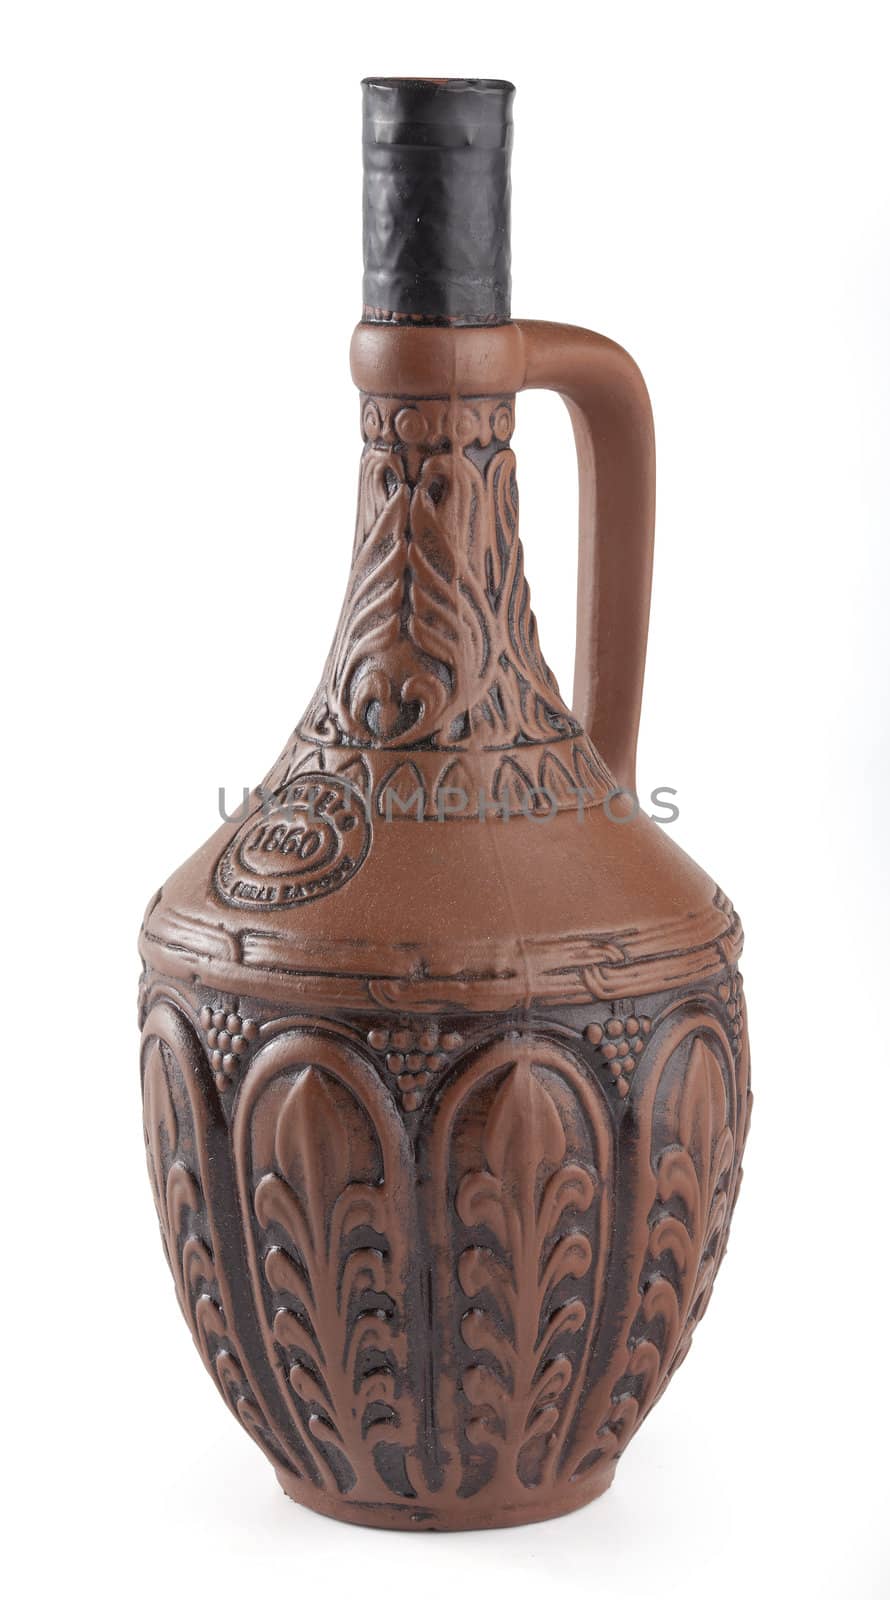 Clay jug by Angorius